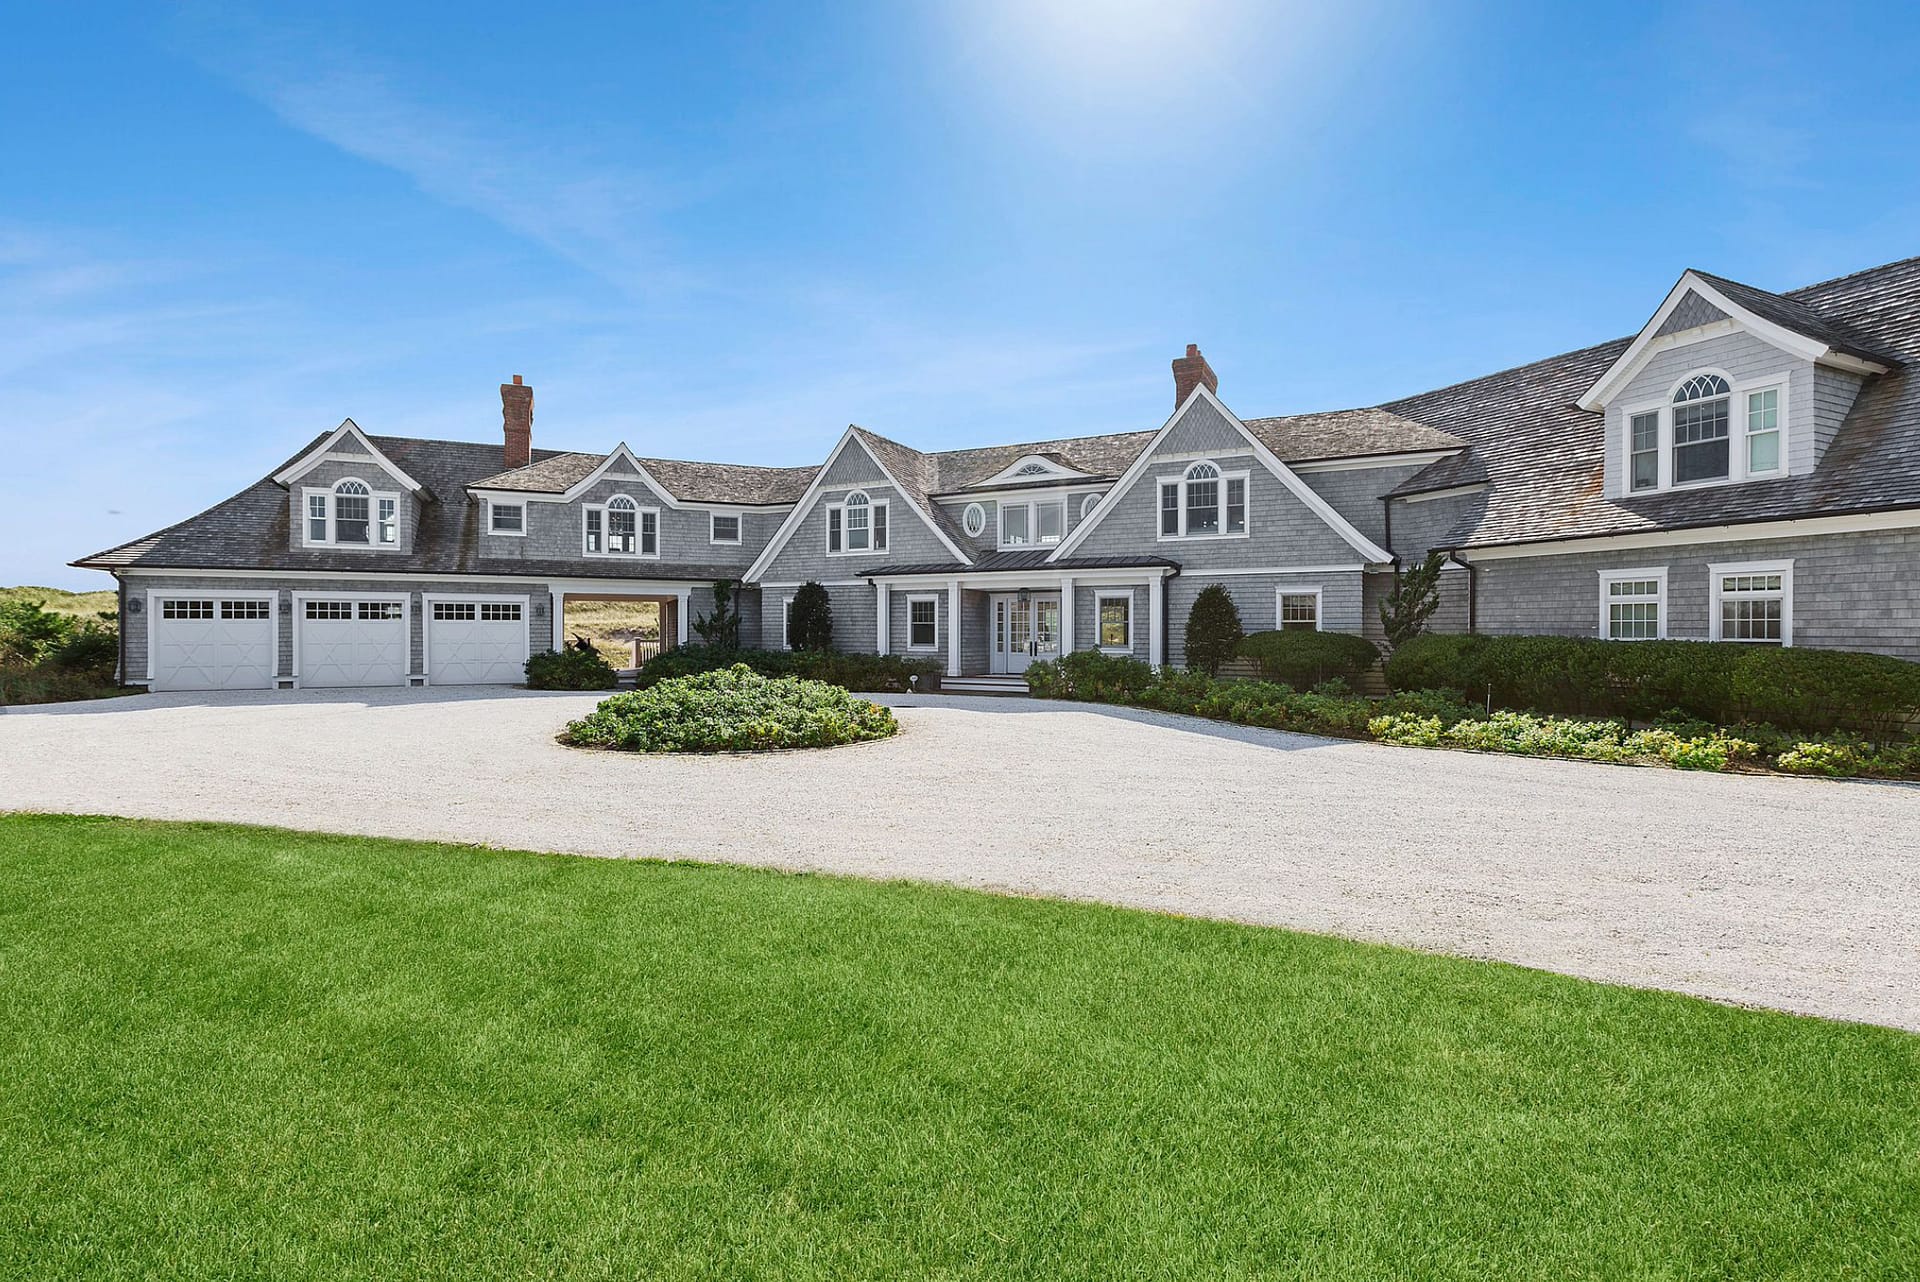 $25 Million Oceanfront Home On Long Island (PHOTOS)